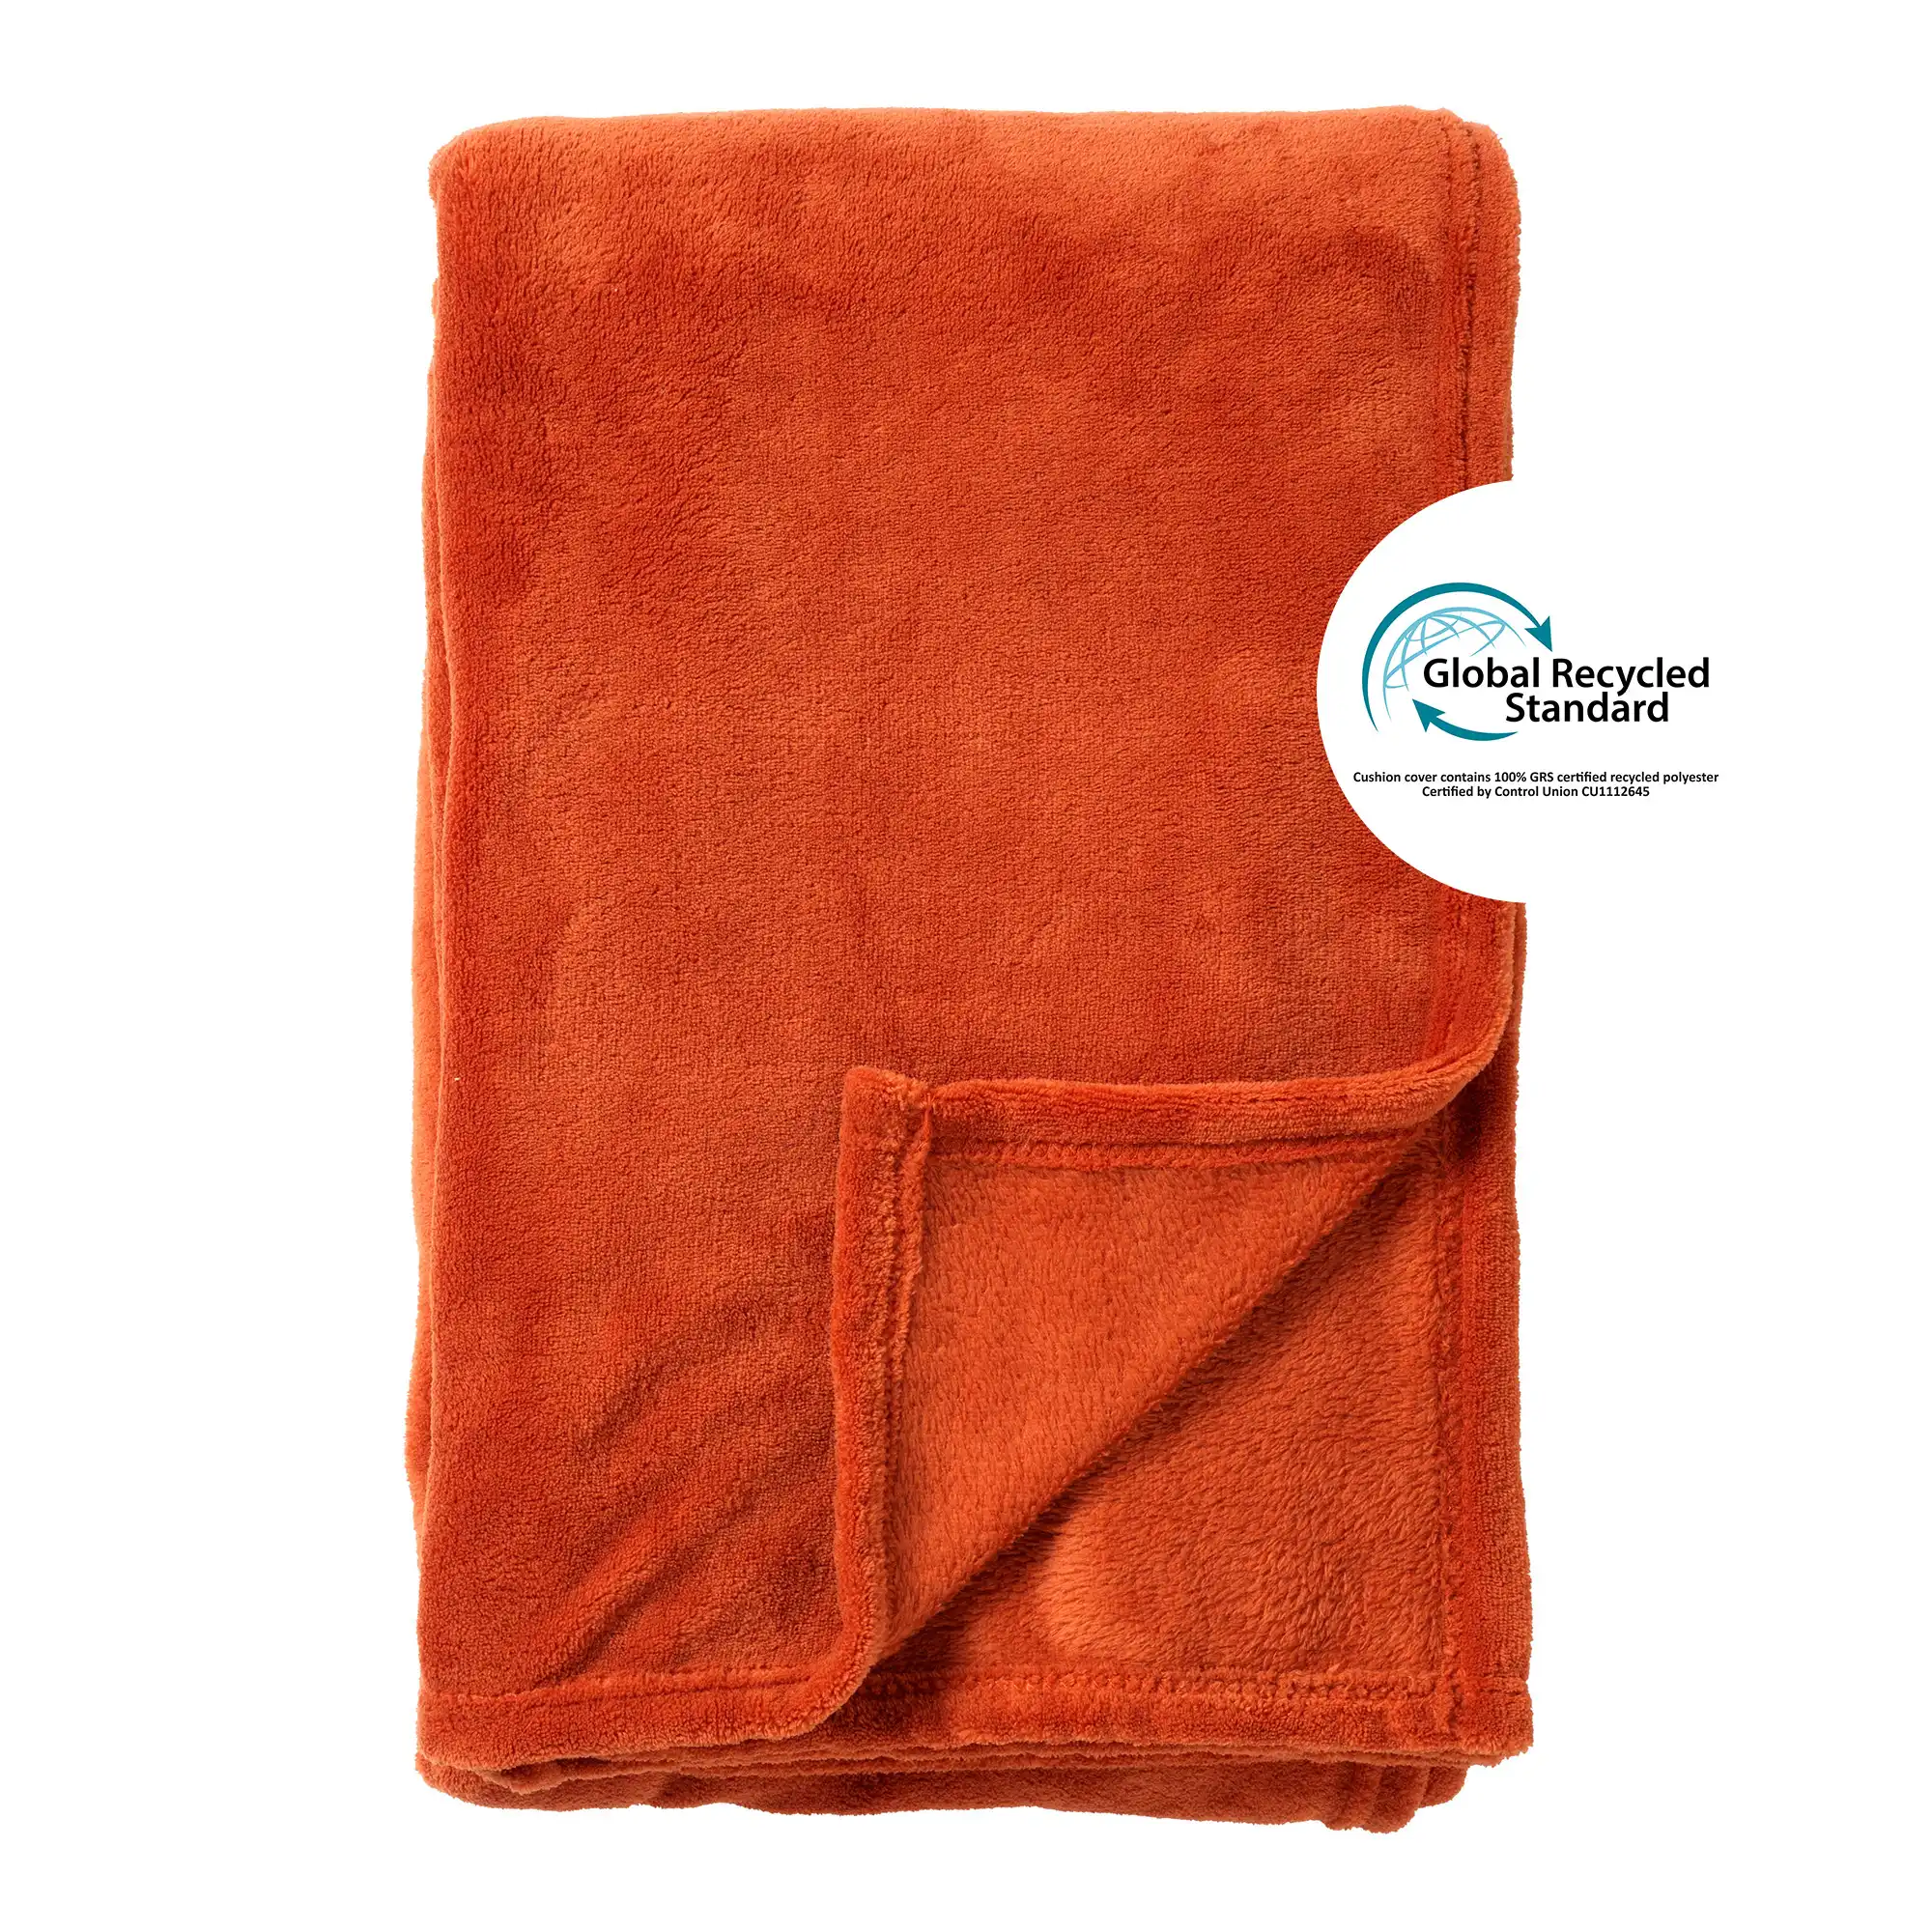 SIDNEY - Plaid 140x180 cm - Fleece deken van 100% gerecycled polyester – superzacht - Eco Line collectie - Potters Clay - oranje